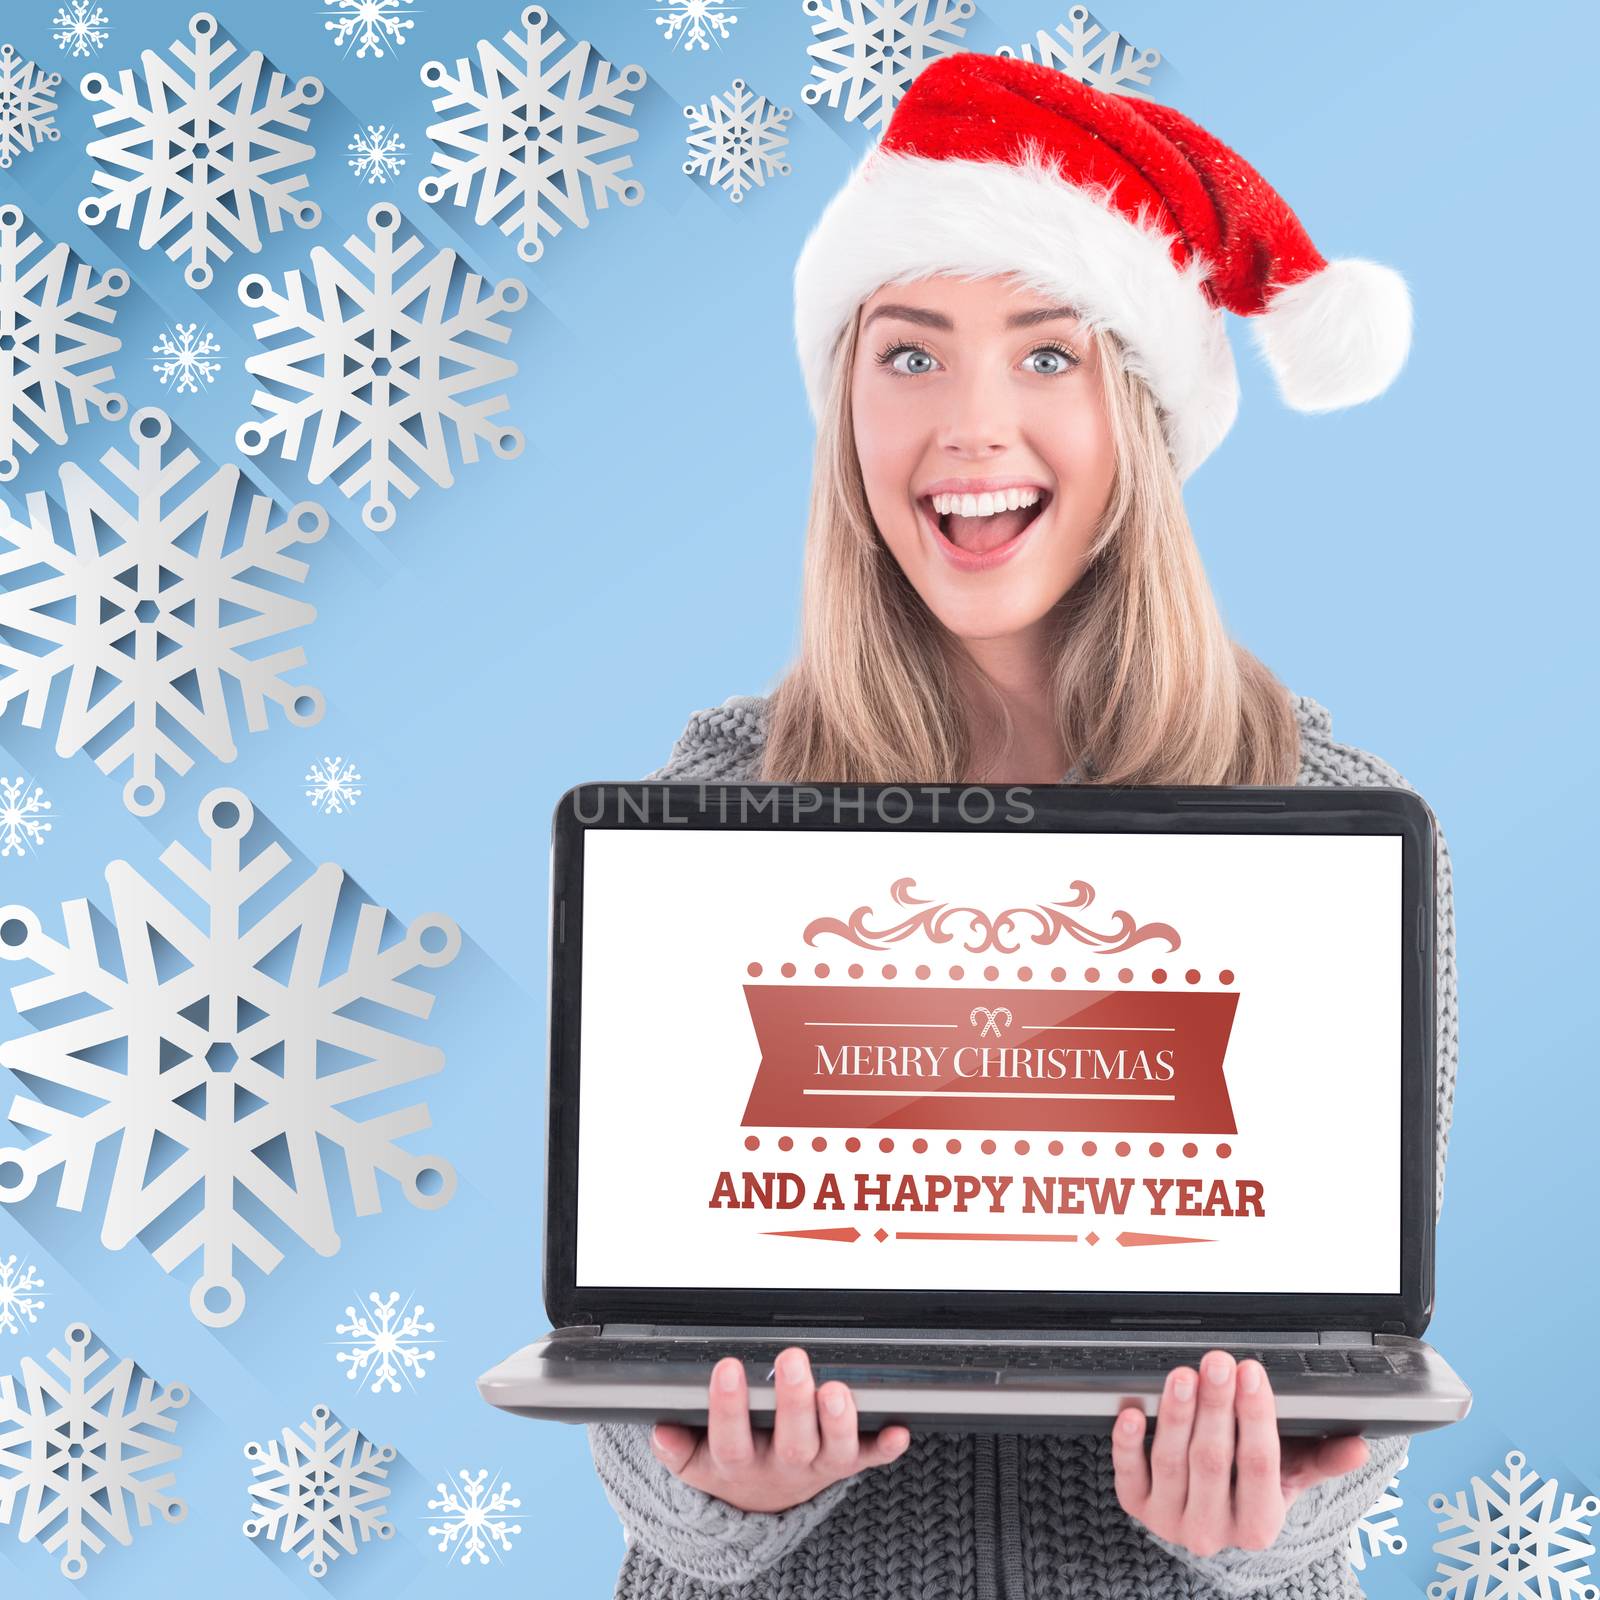 Festive blonde holding a laptop against snow flake frame design on blue